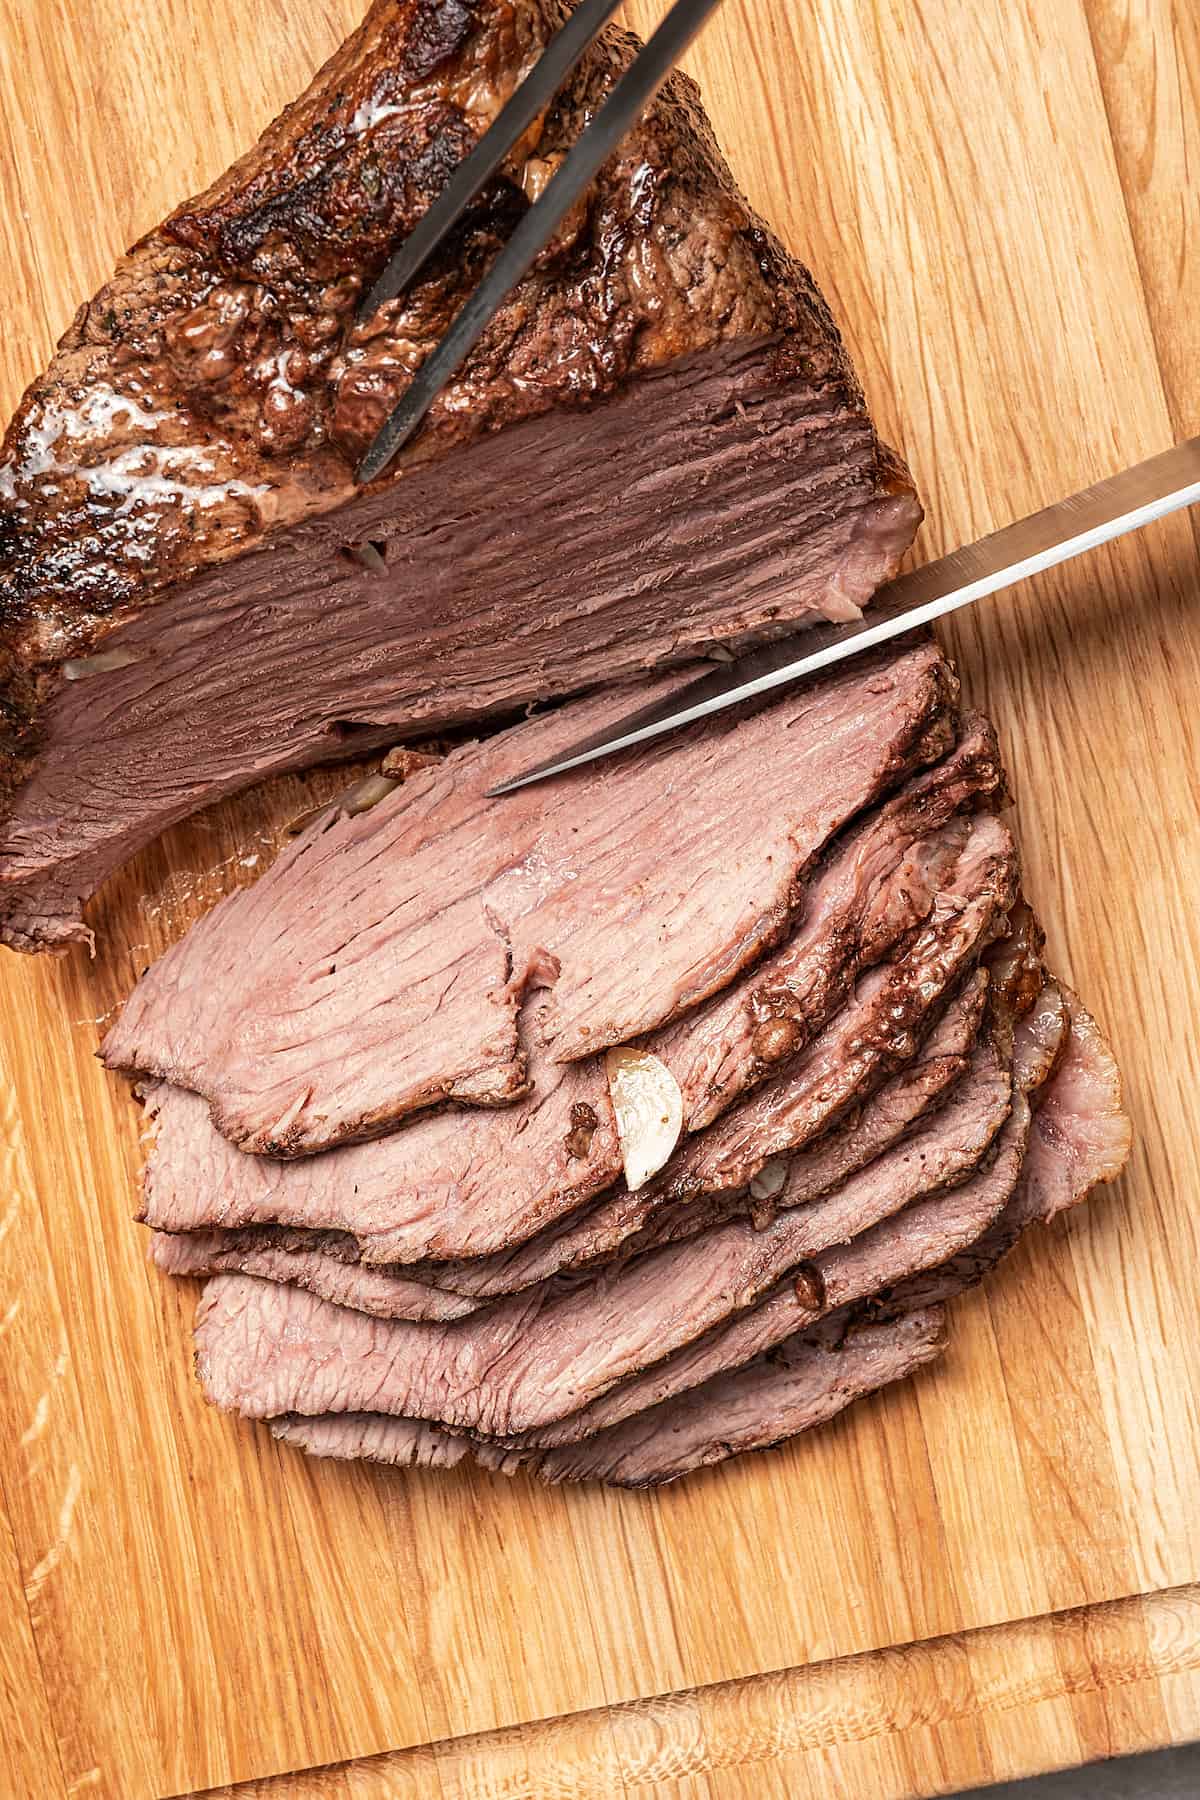 Slicing roast beef on a cutting board.